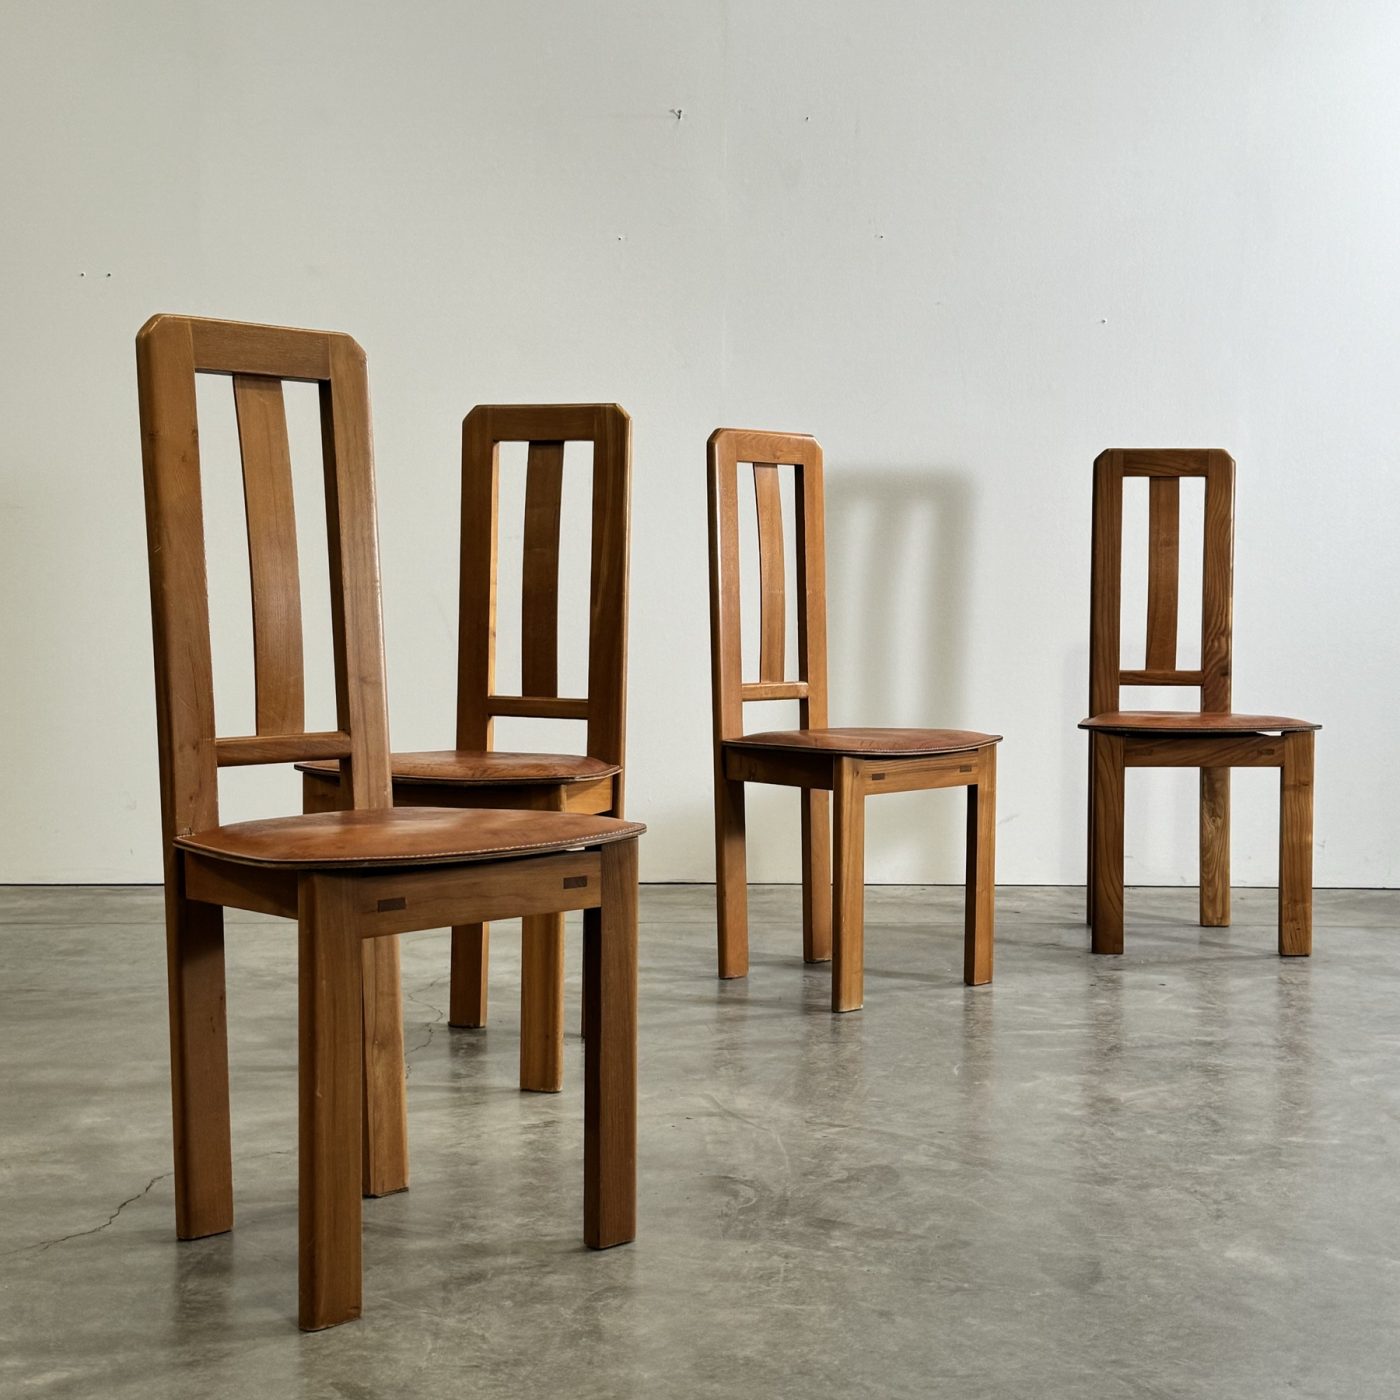 objet-vagabond-elm-chairs0003